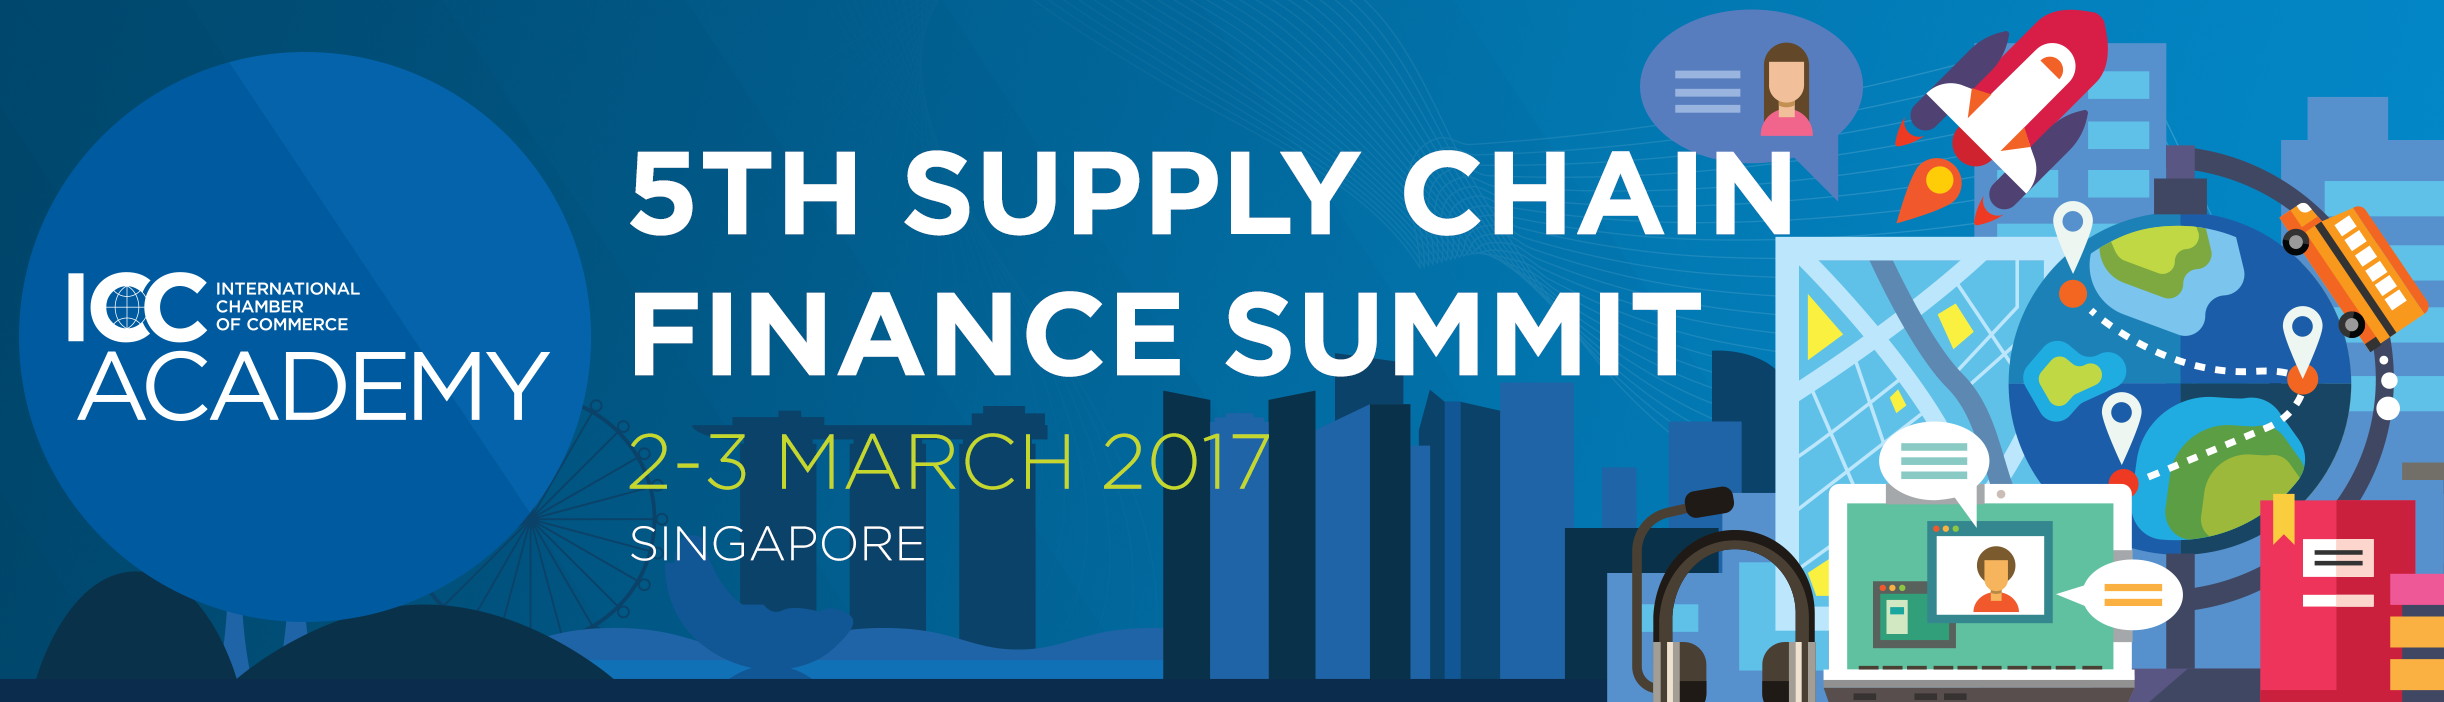 icc-academy-5th-supply-chain-finance-summit_source